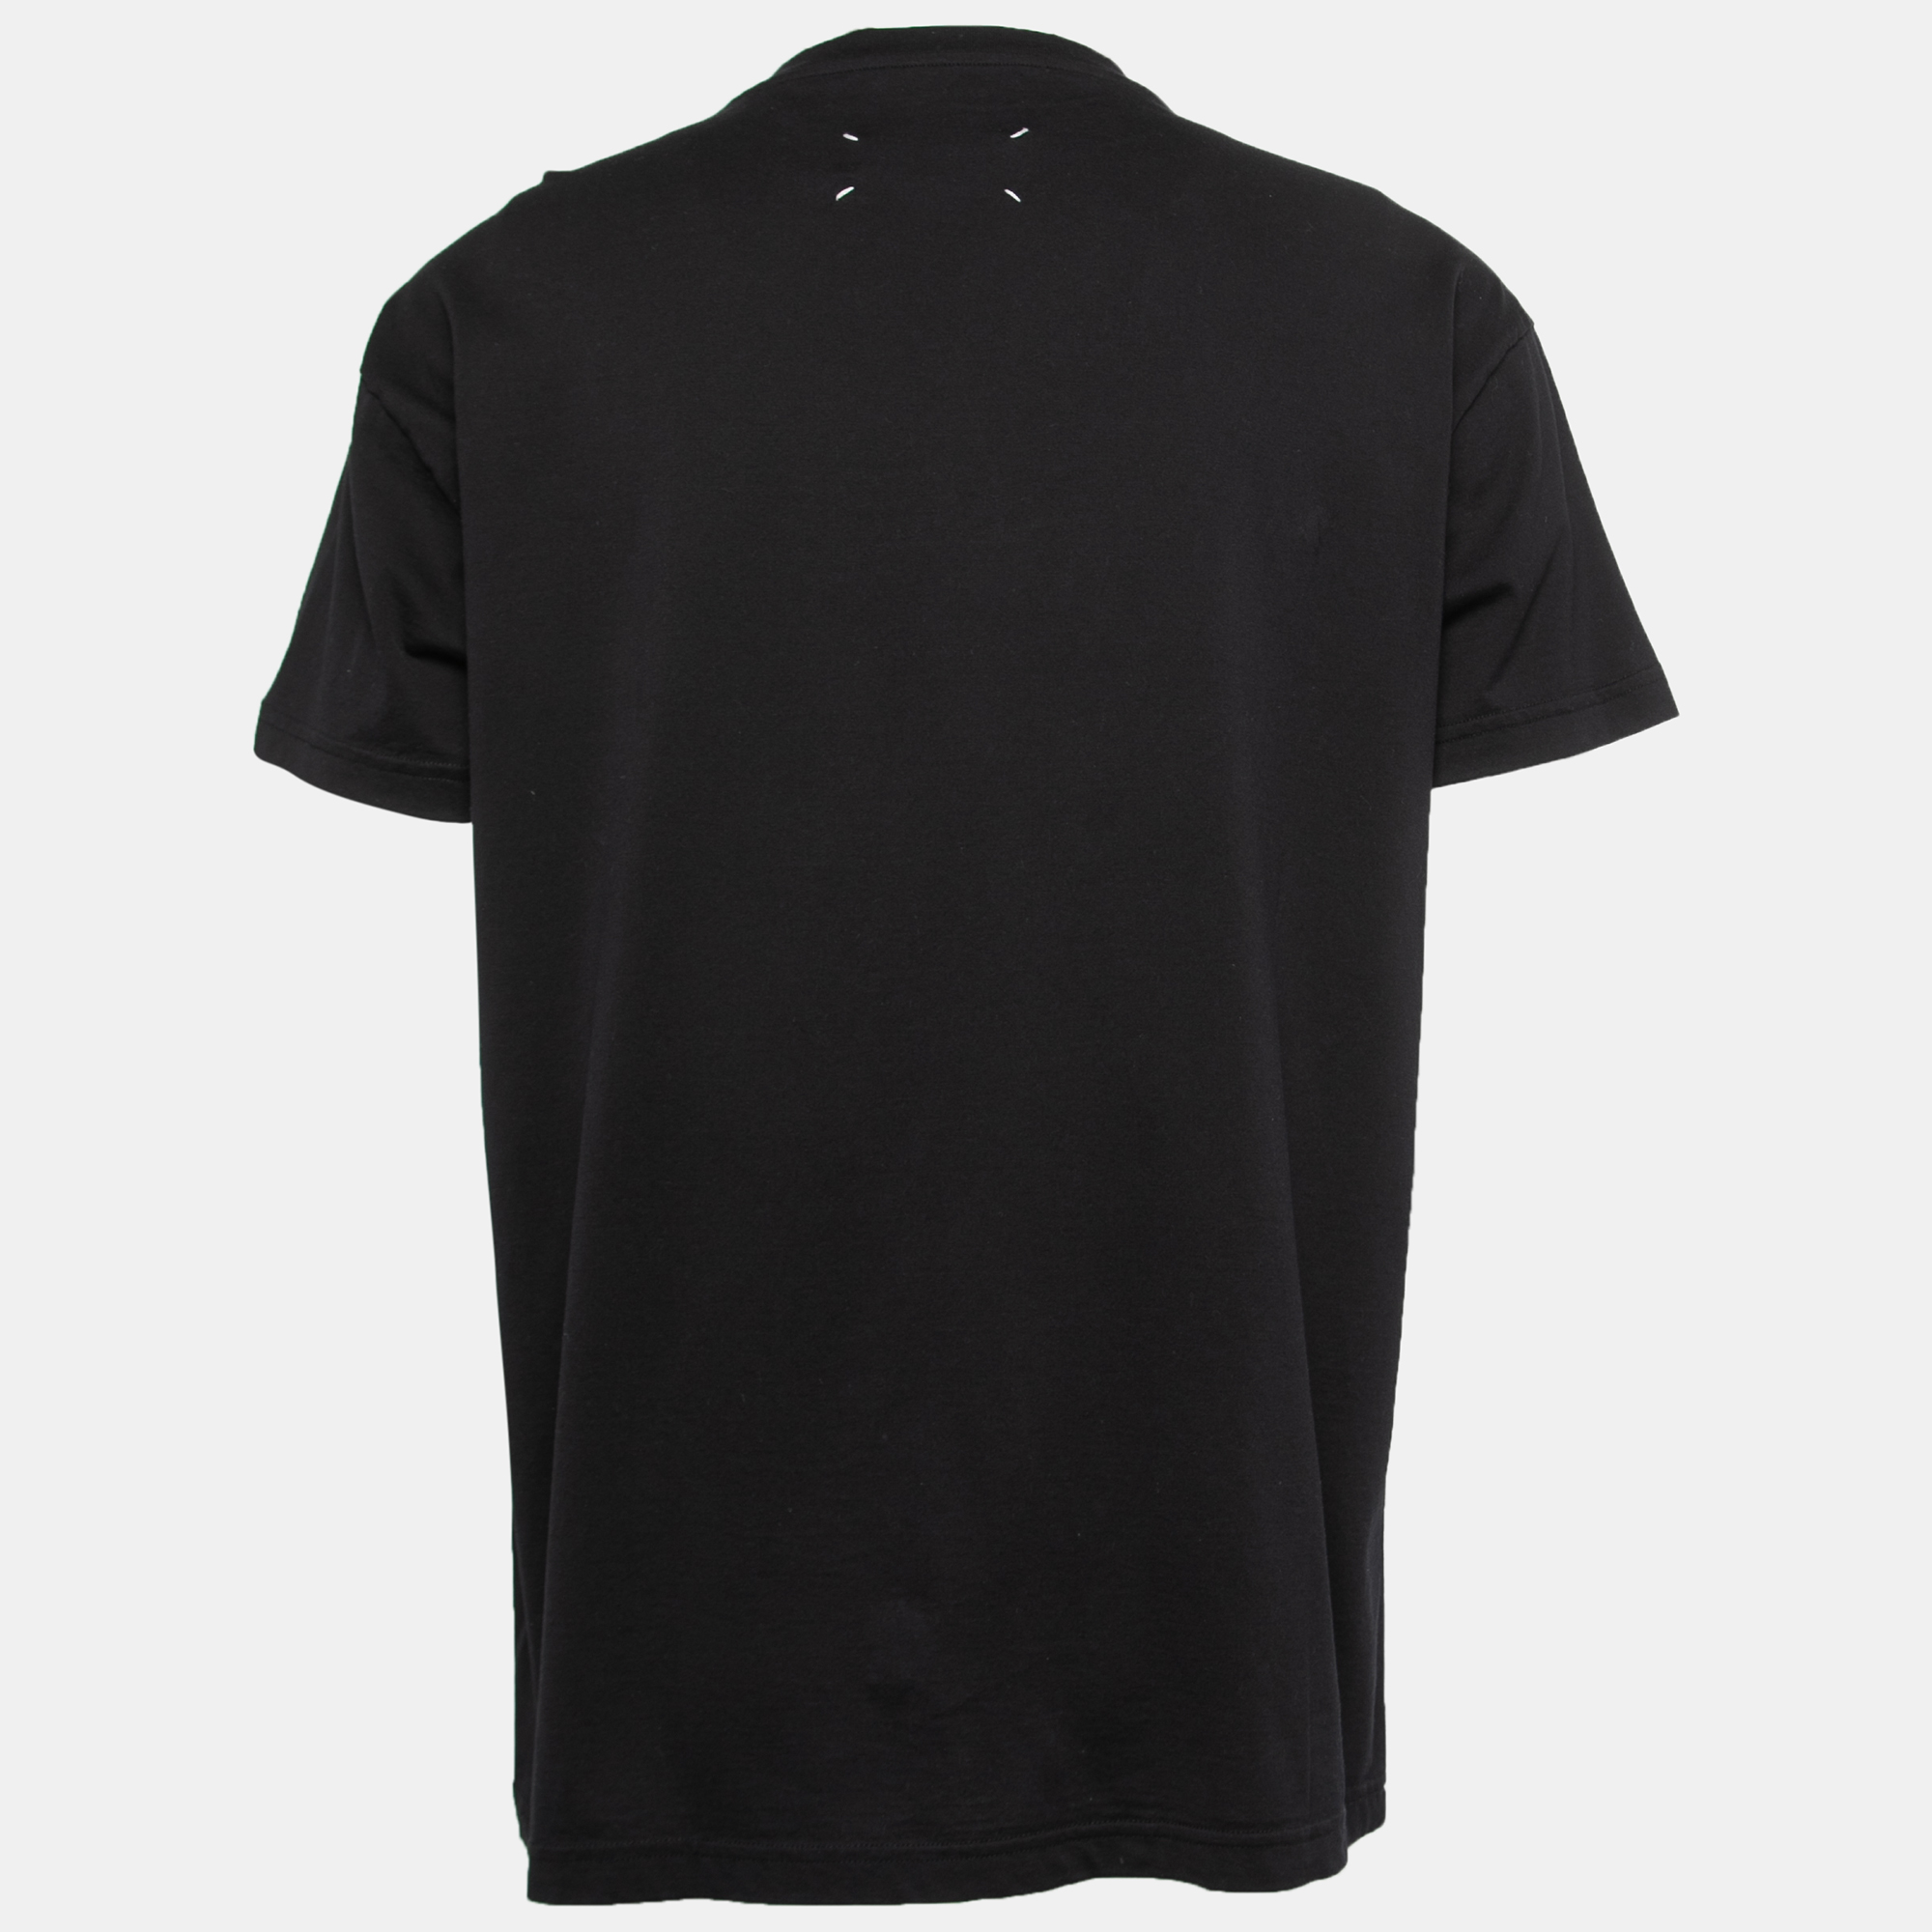 

Maison Martin Margiela Black Printed Cotton Half Sleeve T-Shirt